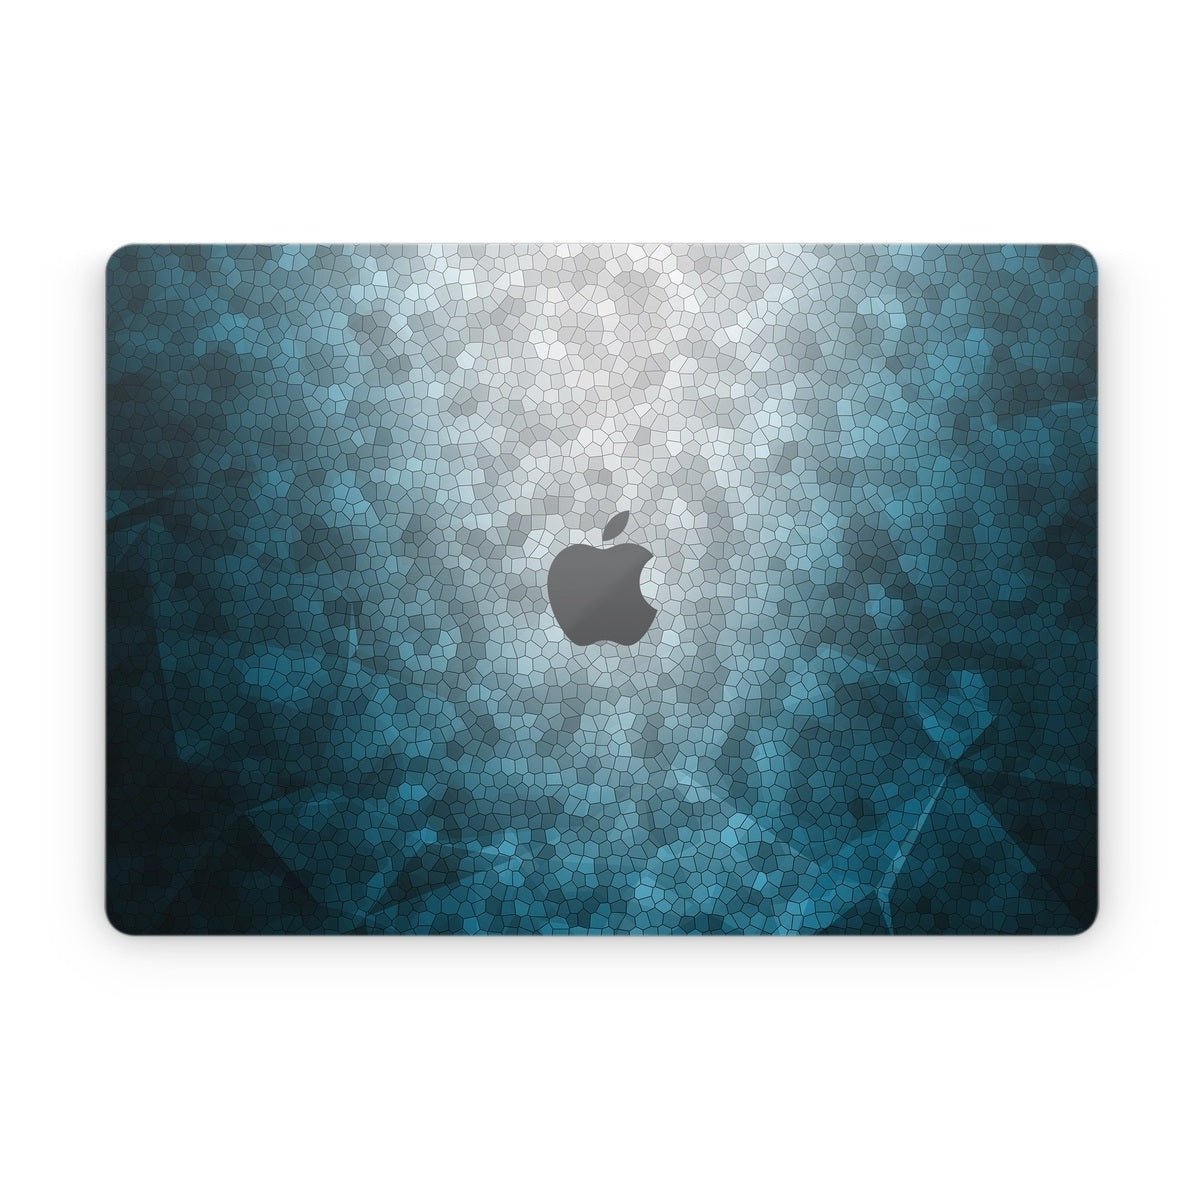 Atmospheric - Apple MacBook Skin - Camo - DecalGirl